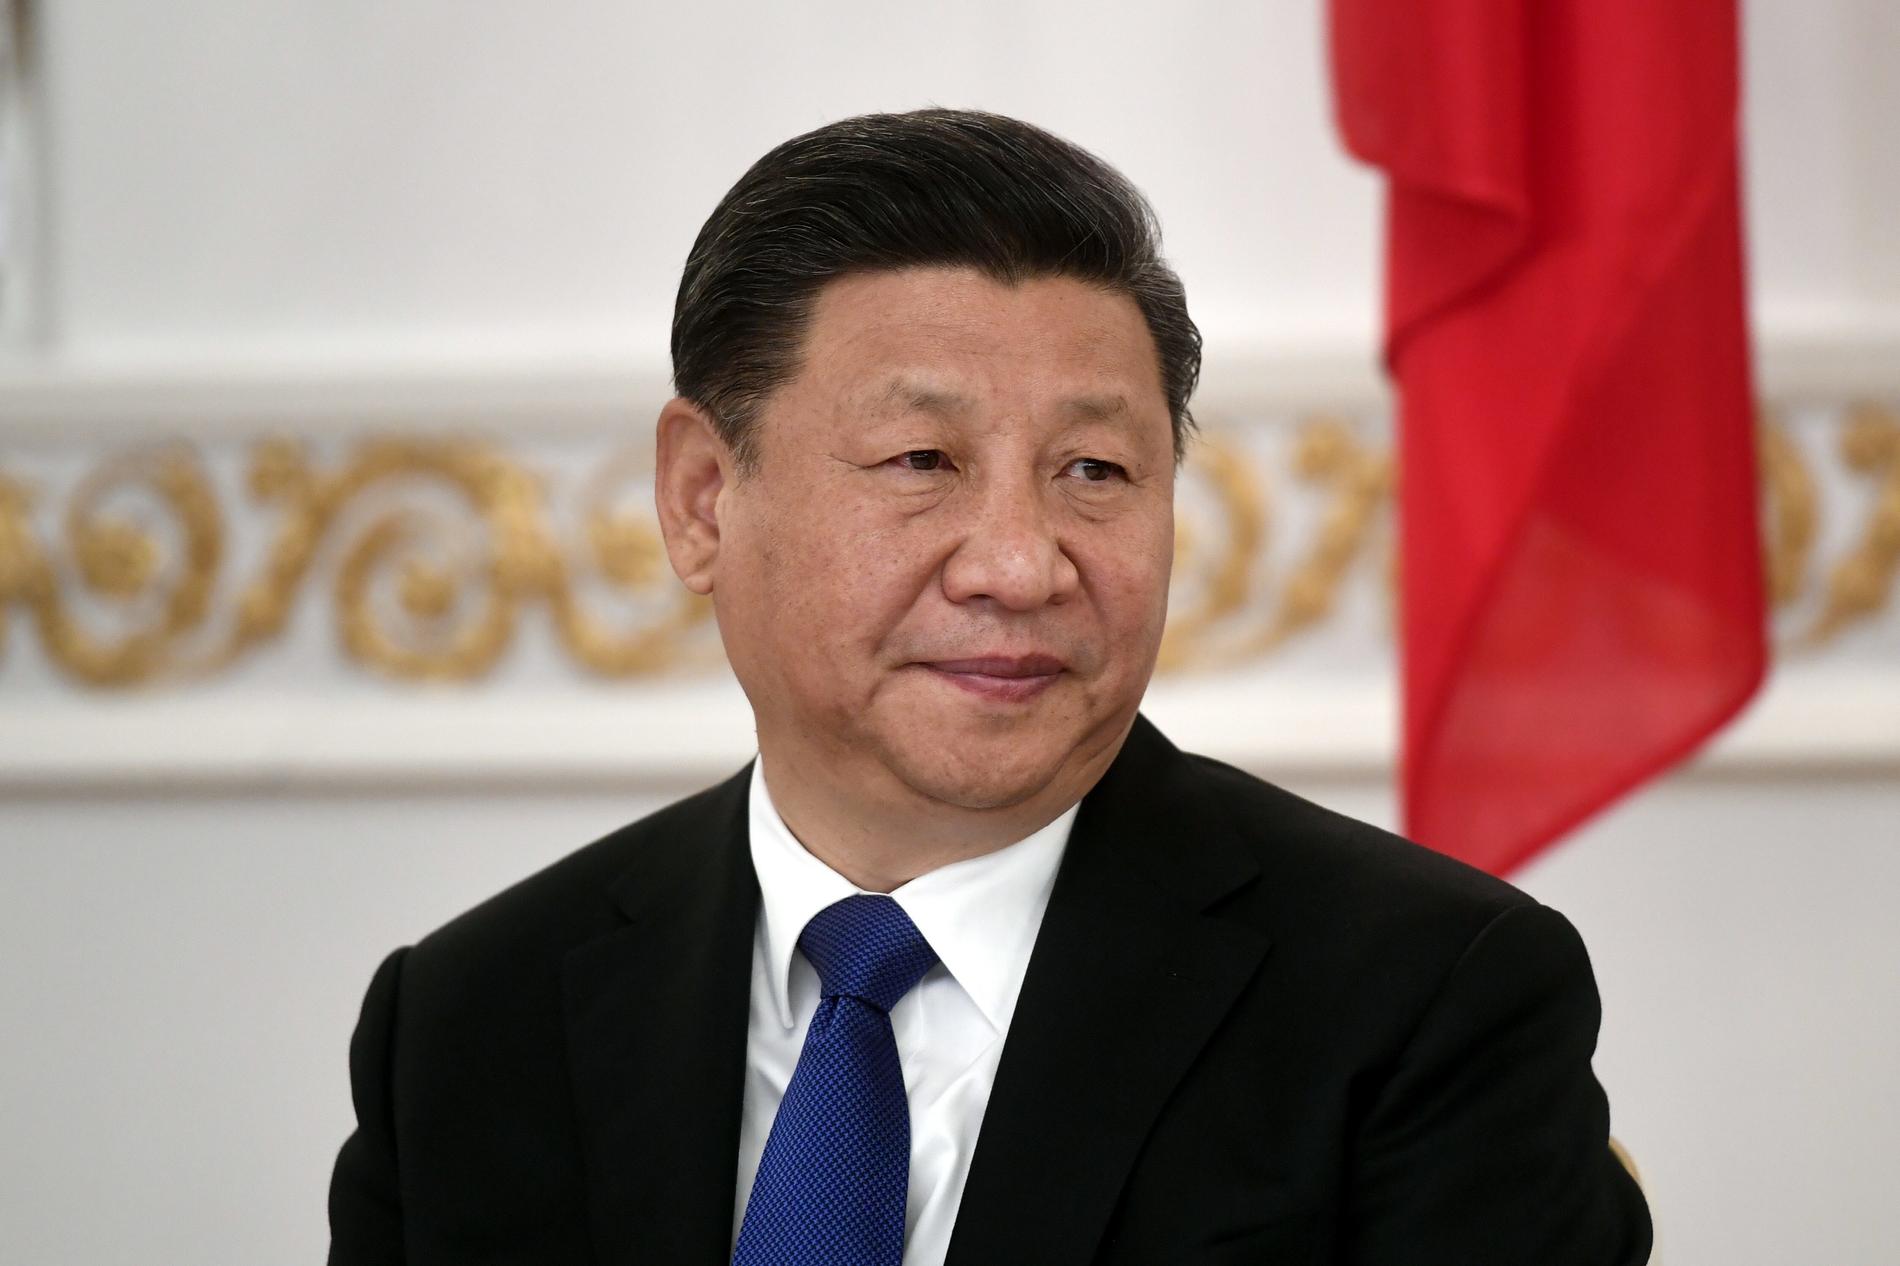 Kinas ledare Xi Jinping.